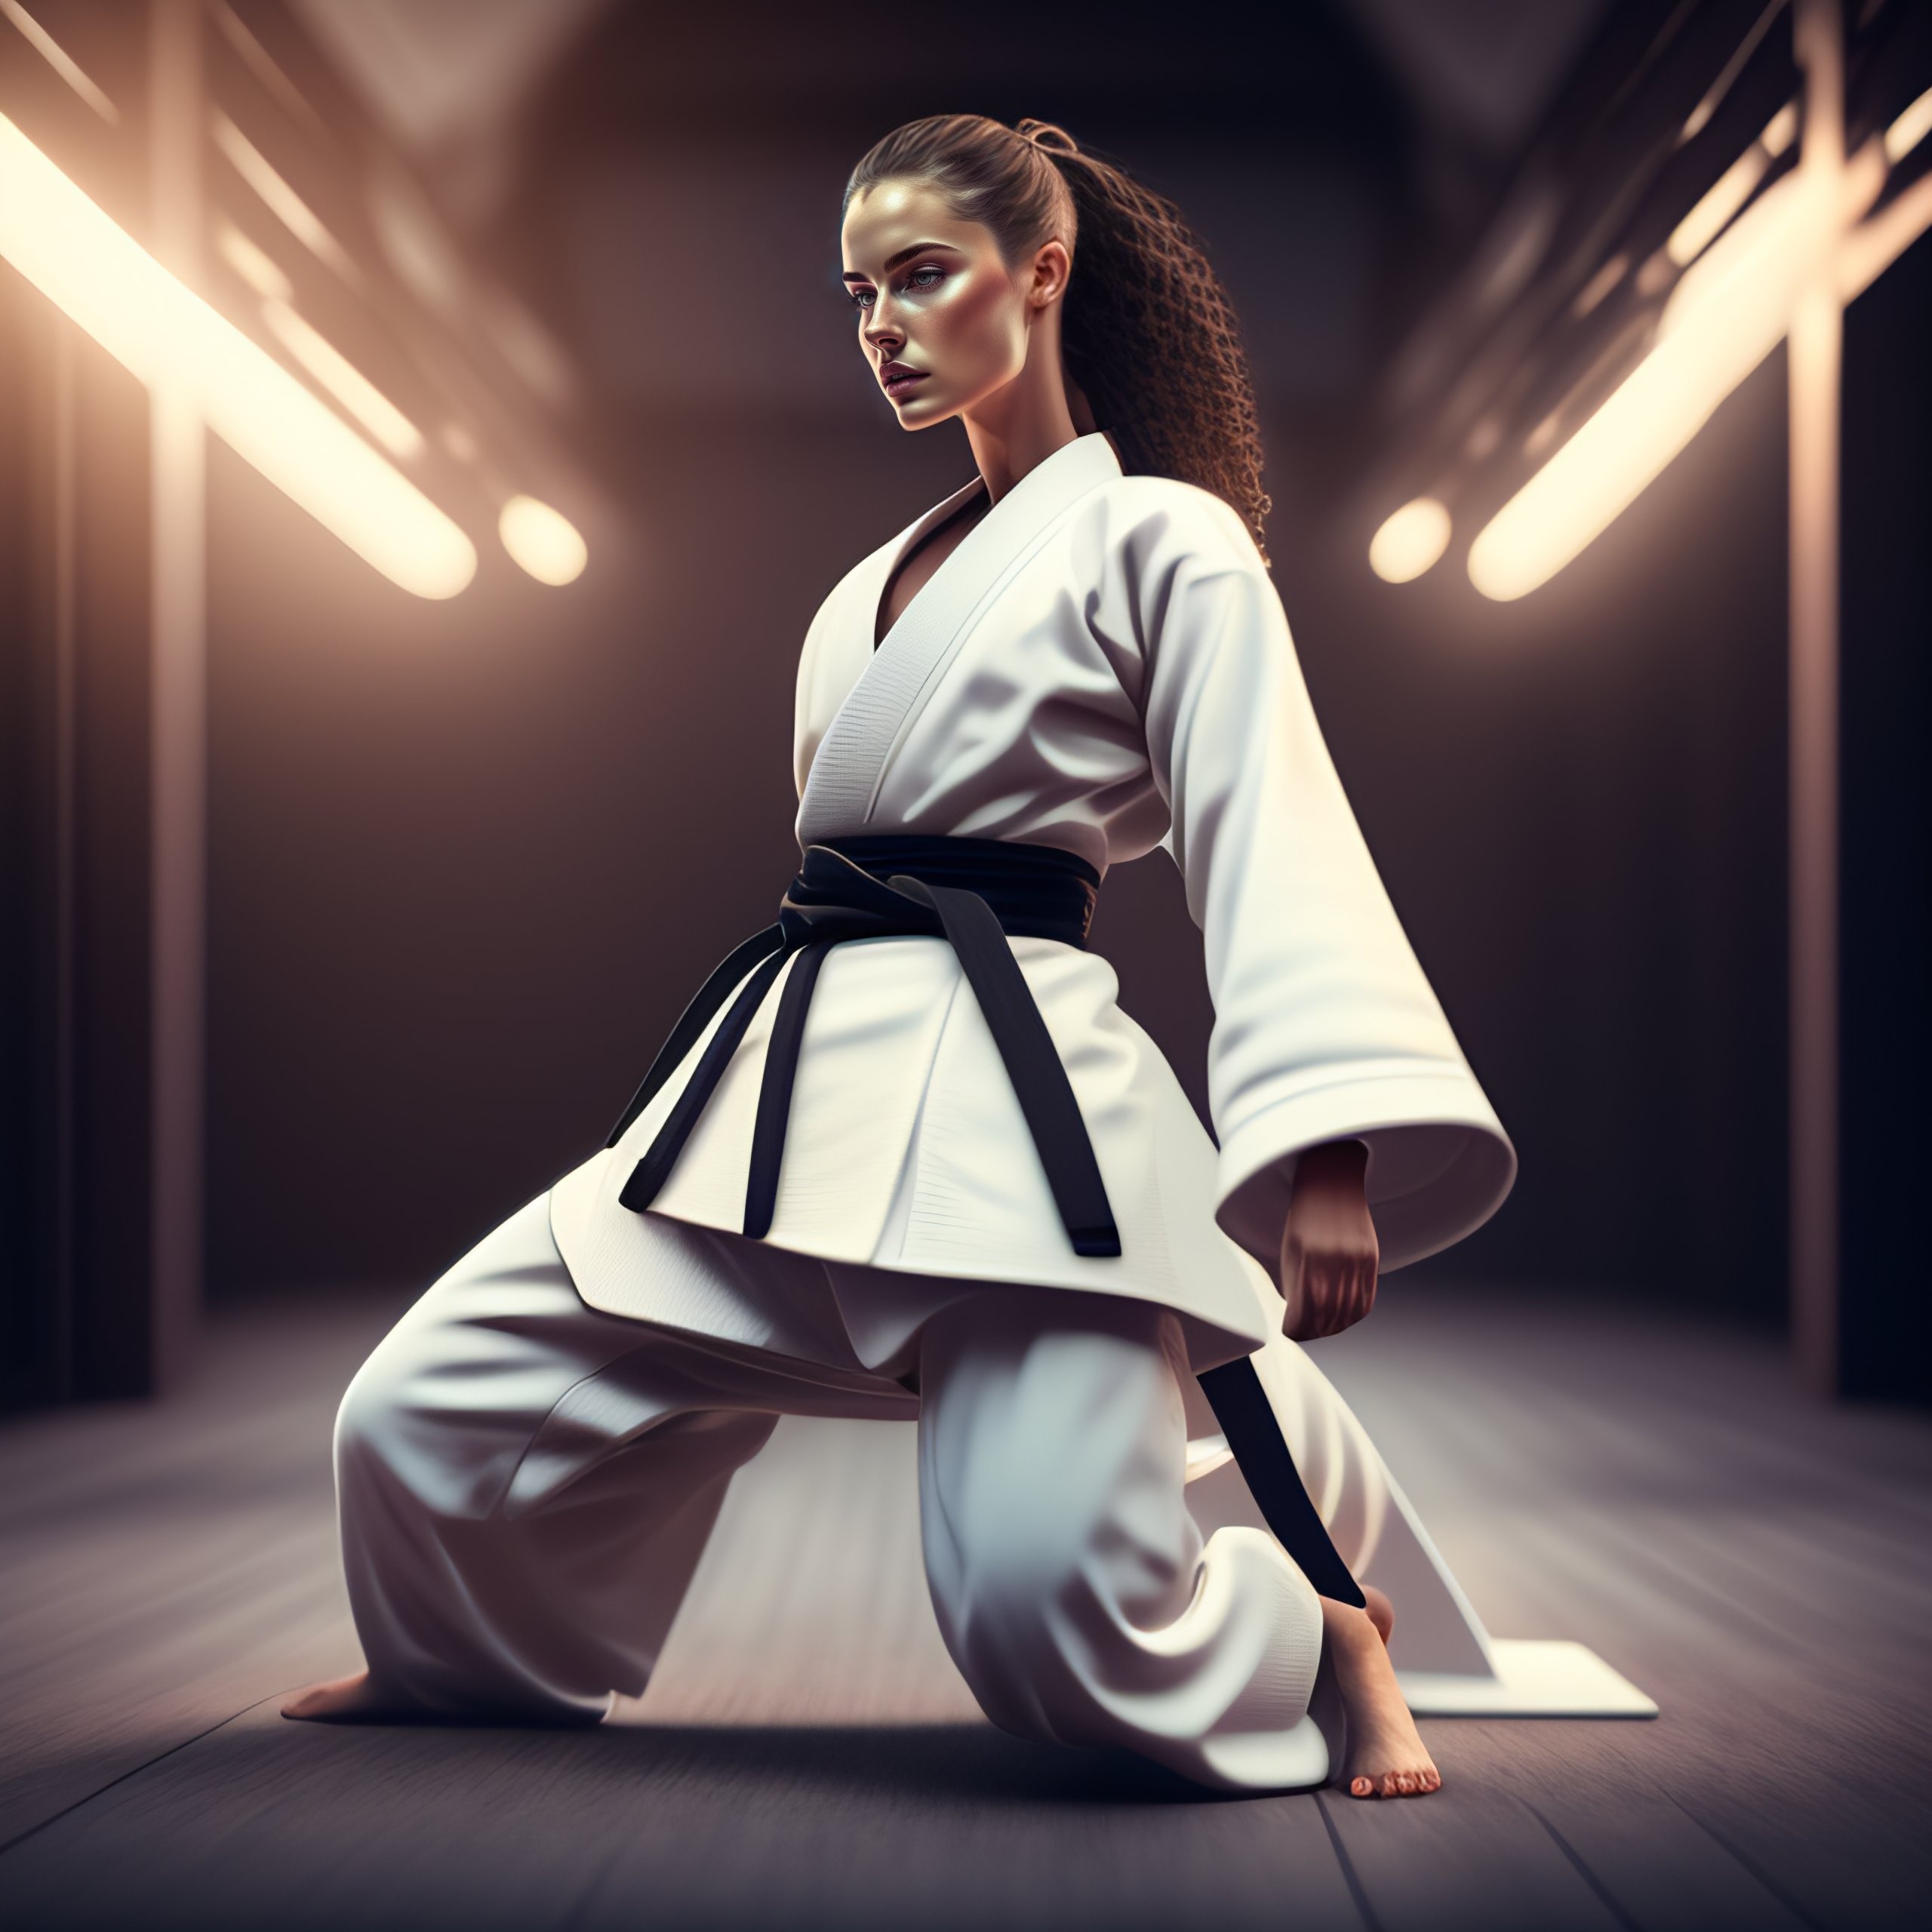 Lexica - Art of aikido girl, girl training hitting the air, 20 years ...